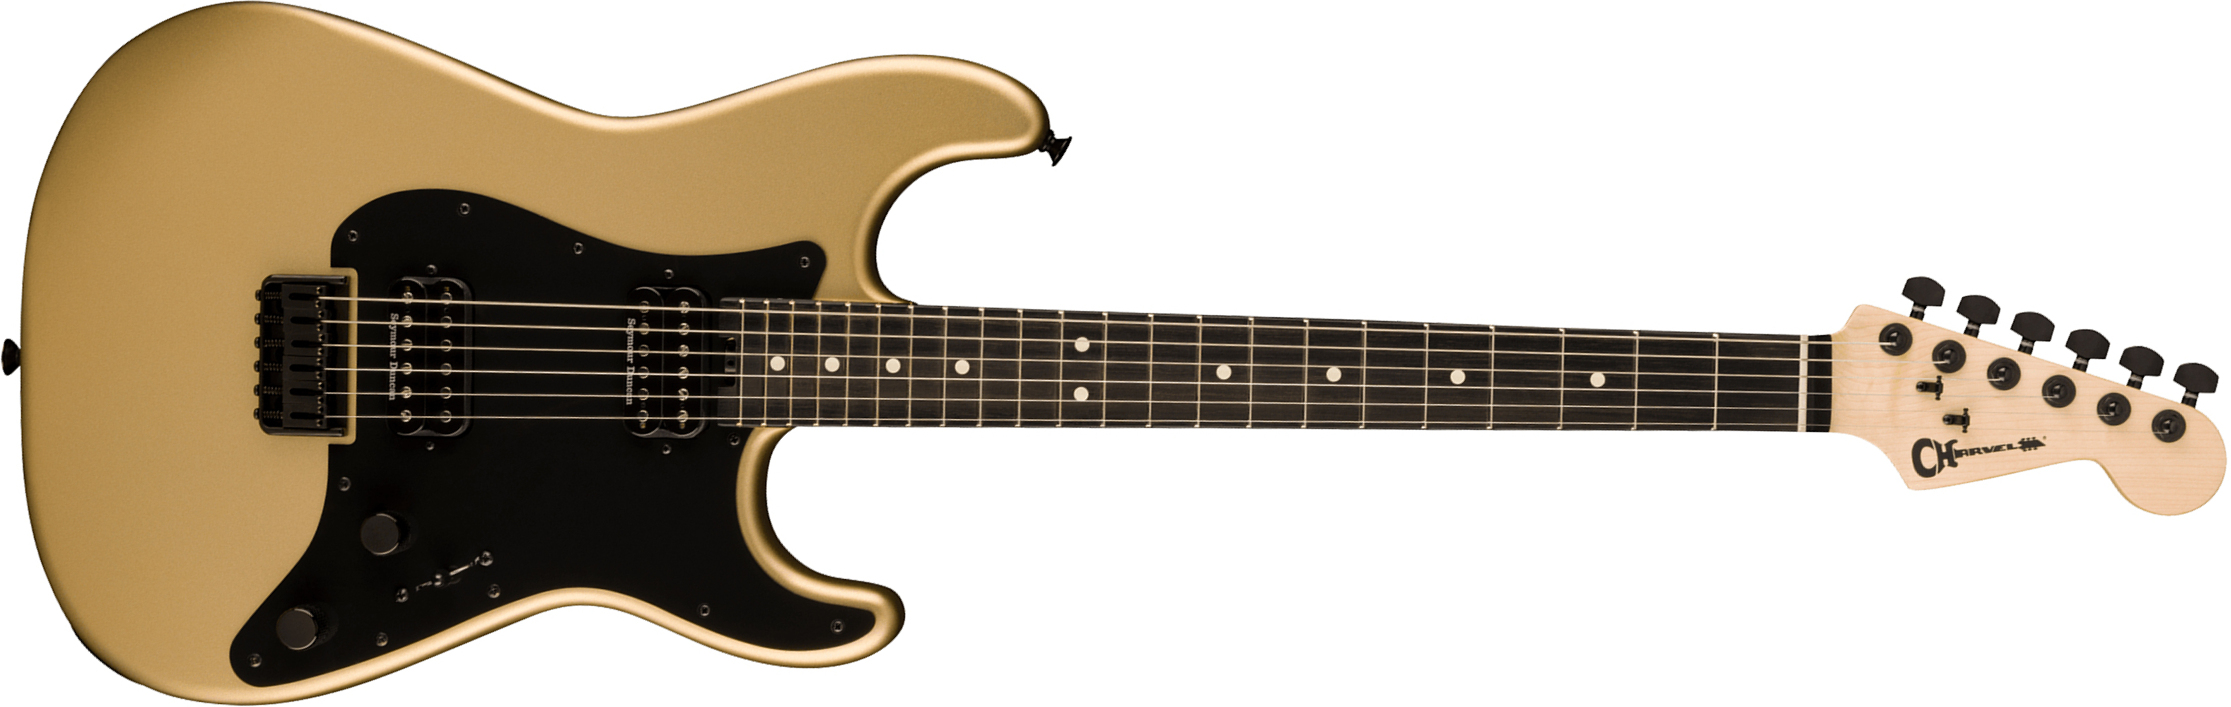 Charvel So-cal Style 1 Hh Ht E Pro-mod 2h Seymour Duncan Eb - Pharaohs Gold - E-Gitarre in Str-Form - Main picture